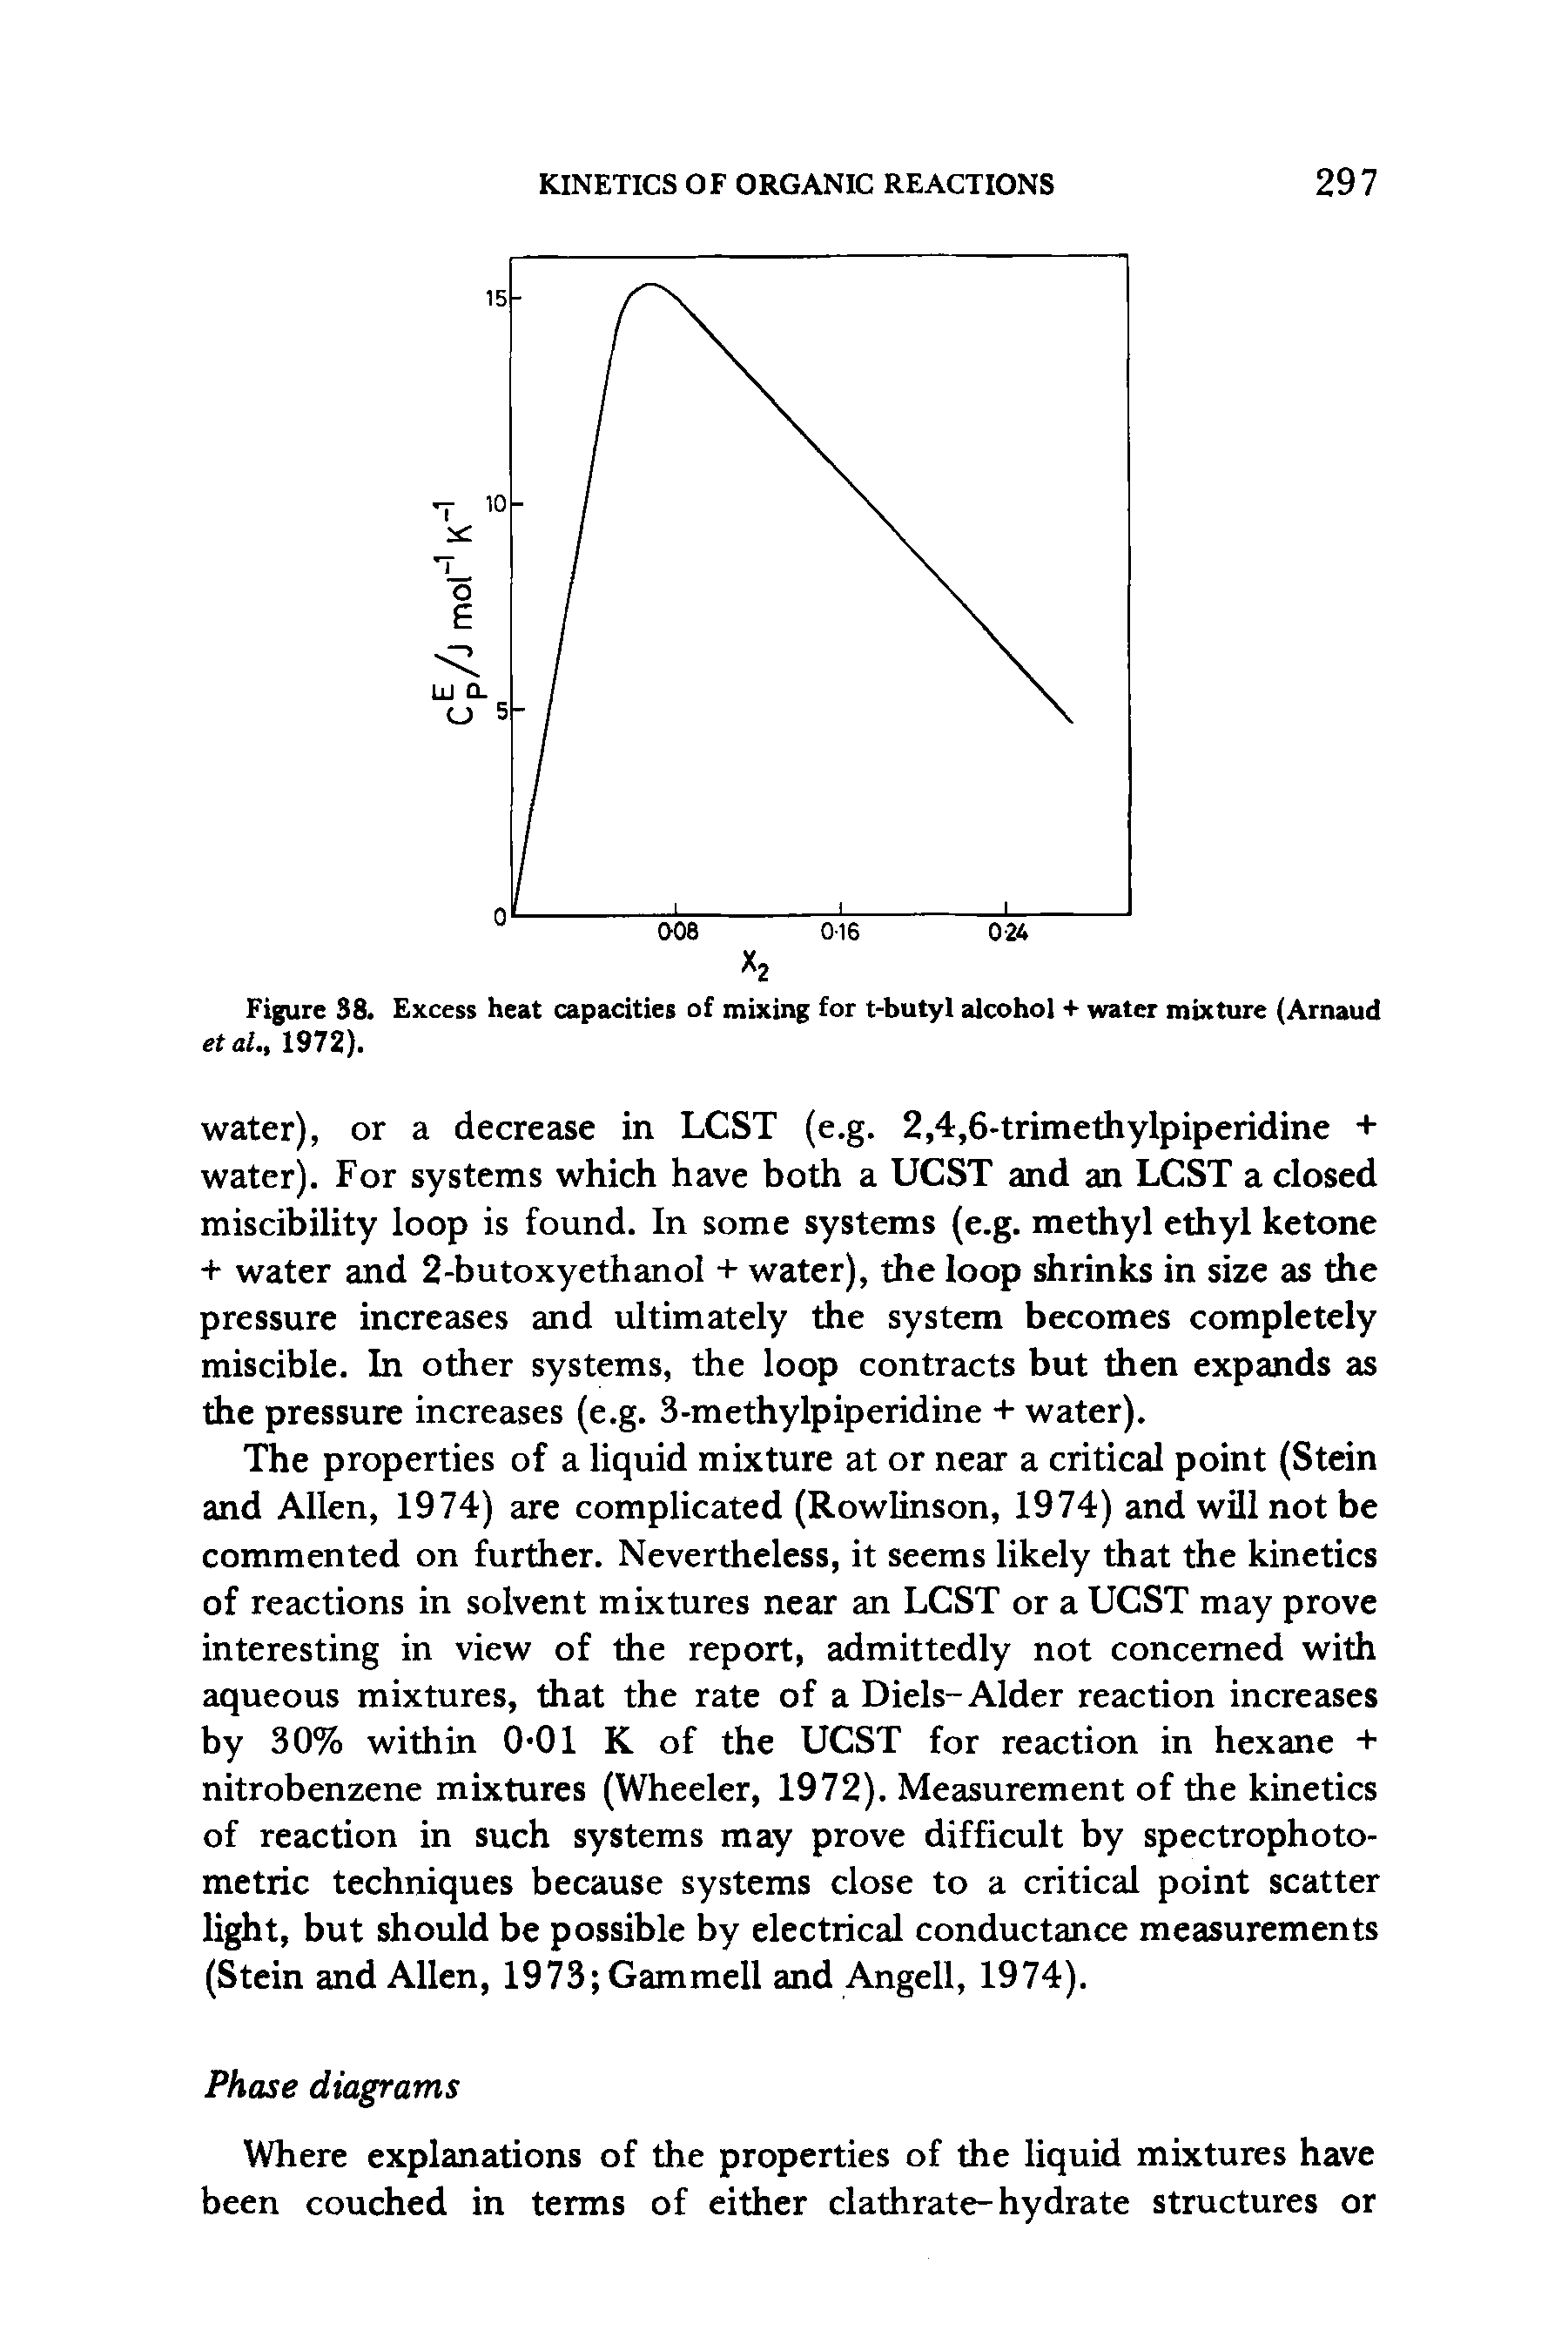 Figure 38. Excess heat capacities of mixing for t-butyl alcohol + water mixture (Arnaud etal., 1972).